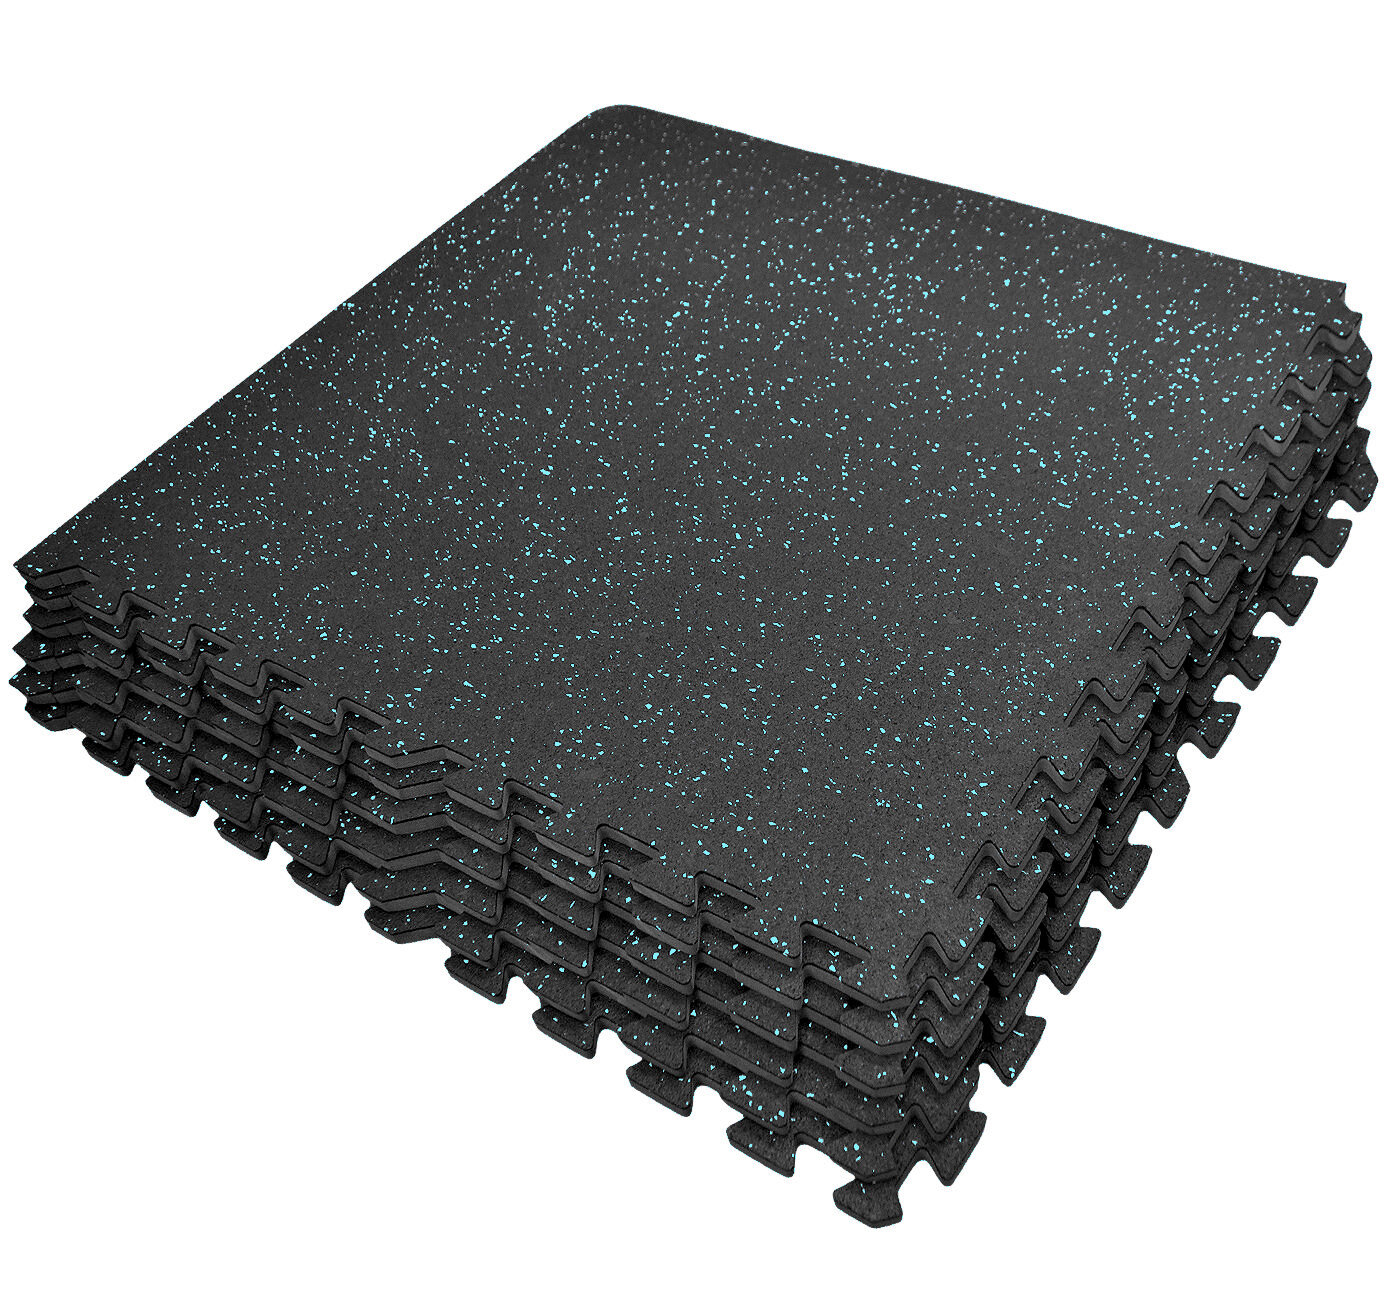 Foam Mat Floor tiles, Interlocking Ultimate Comfort Eva Foam Padding by Stalwart - Soft Flooring for Exercising, Yoga, Camping, Kids, Babies, Playroom